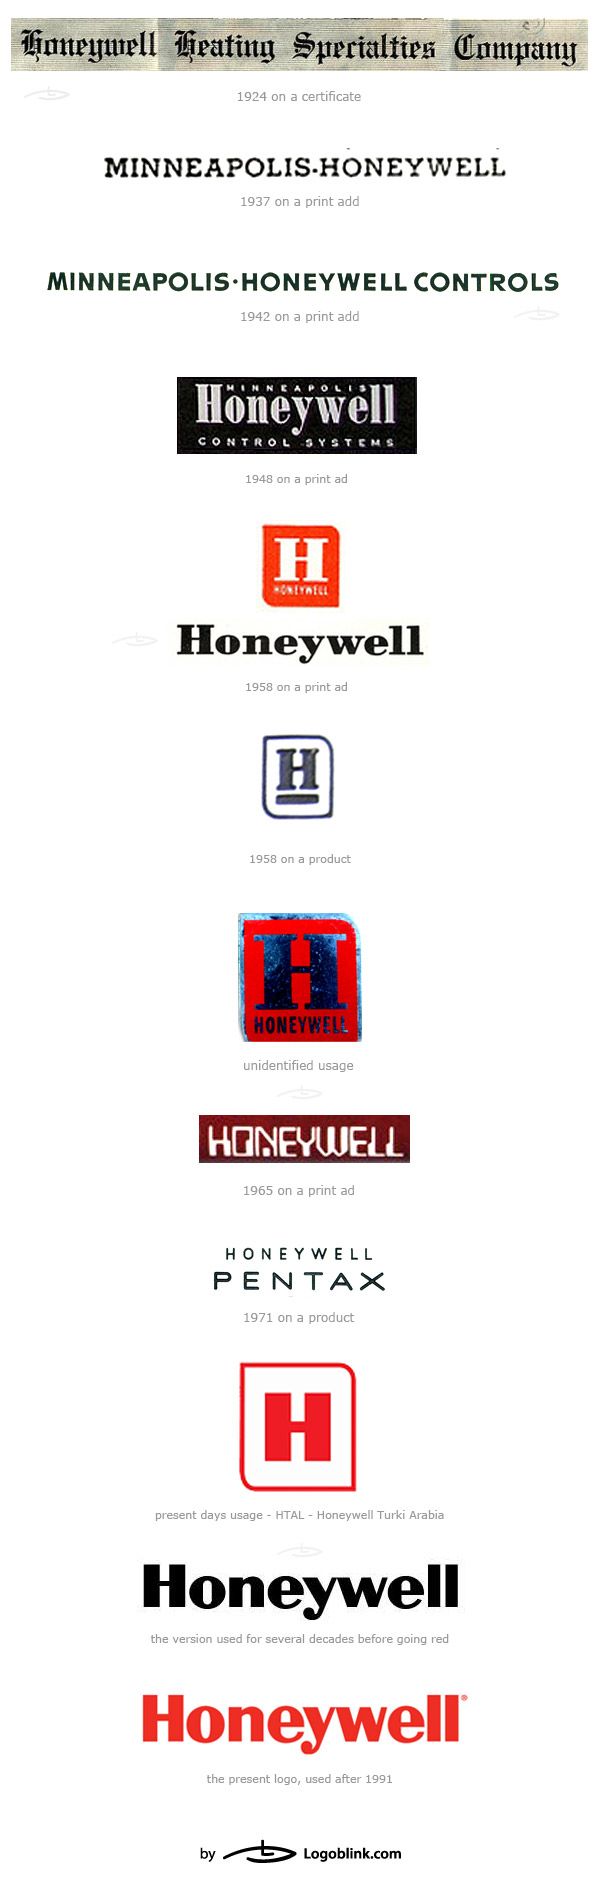 honeywell logo history